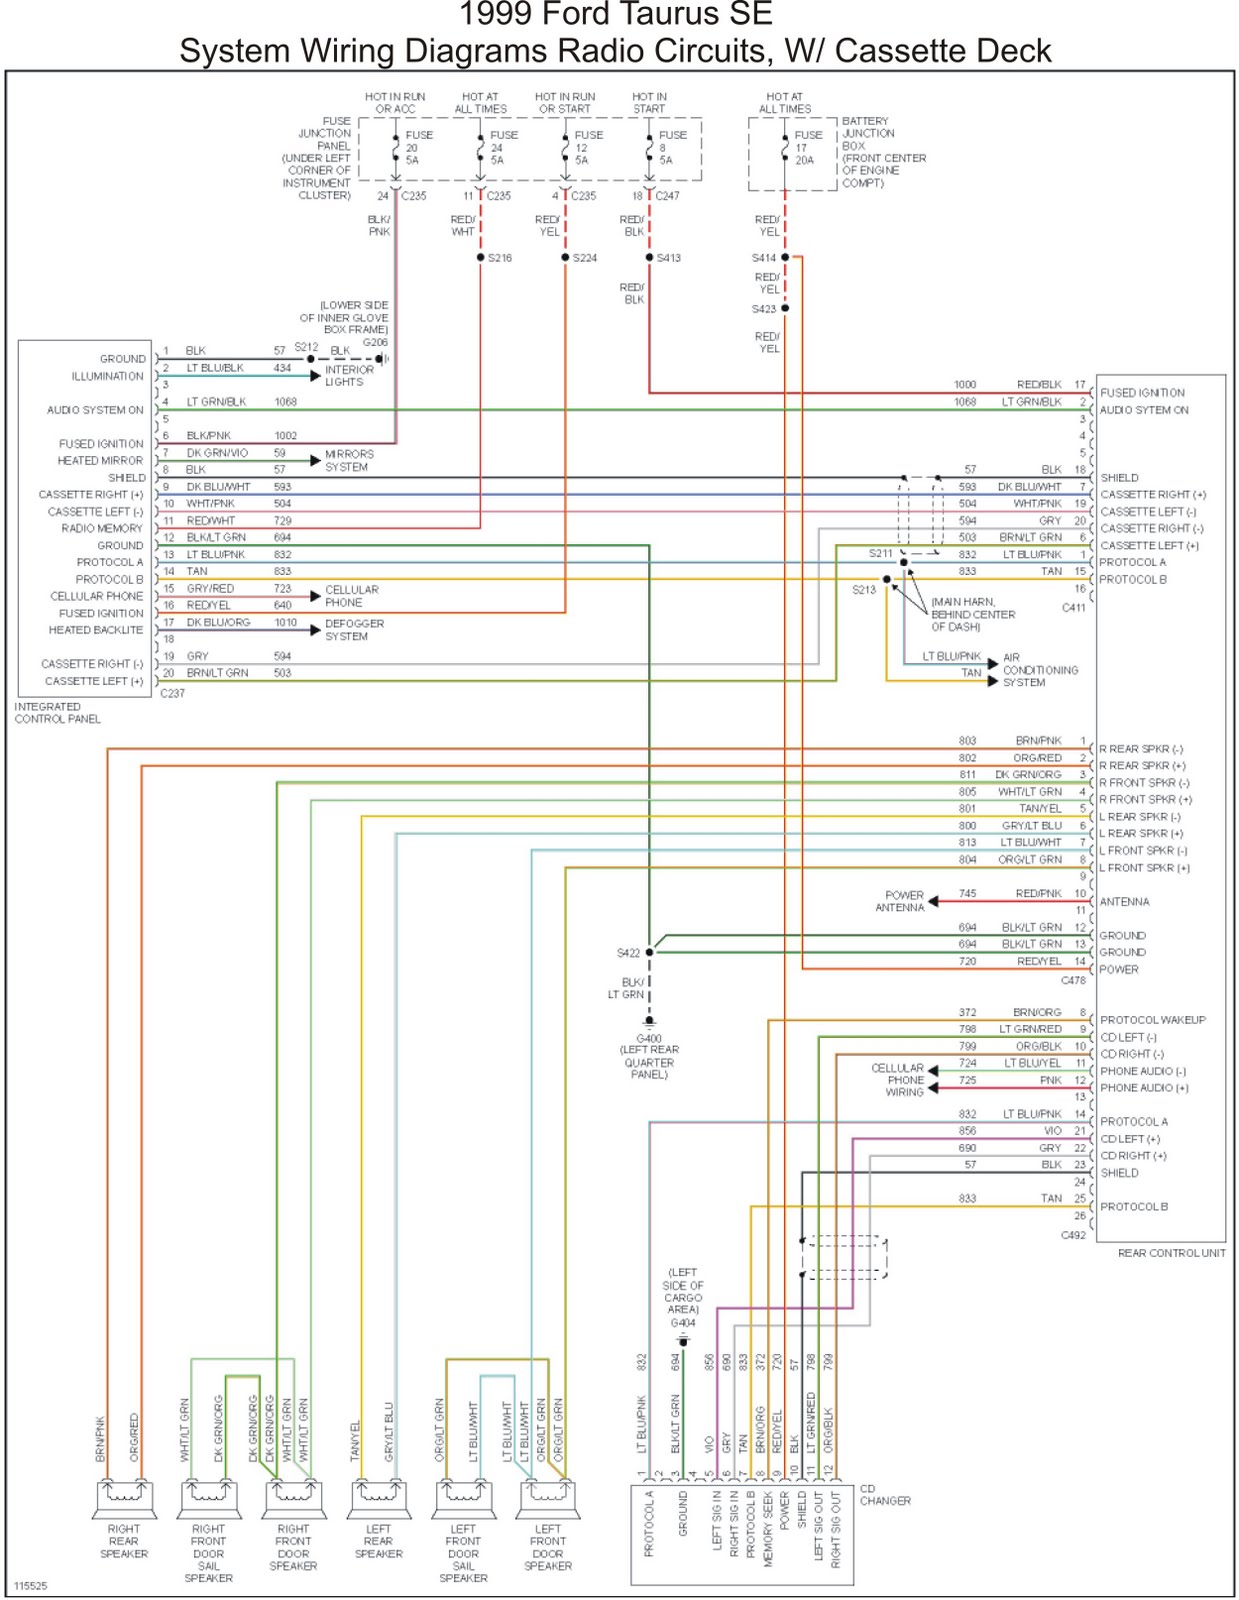 99 Honda Passport Manual Transmission Wiring Diagram from 3.bp.blogspot.com